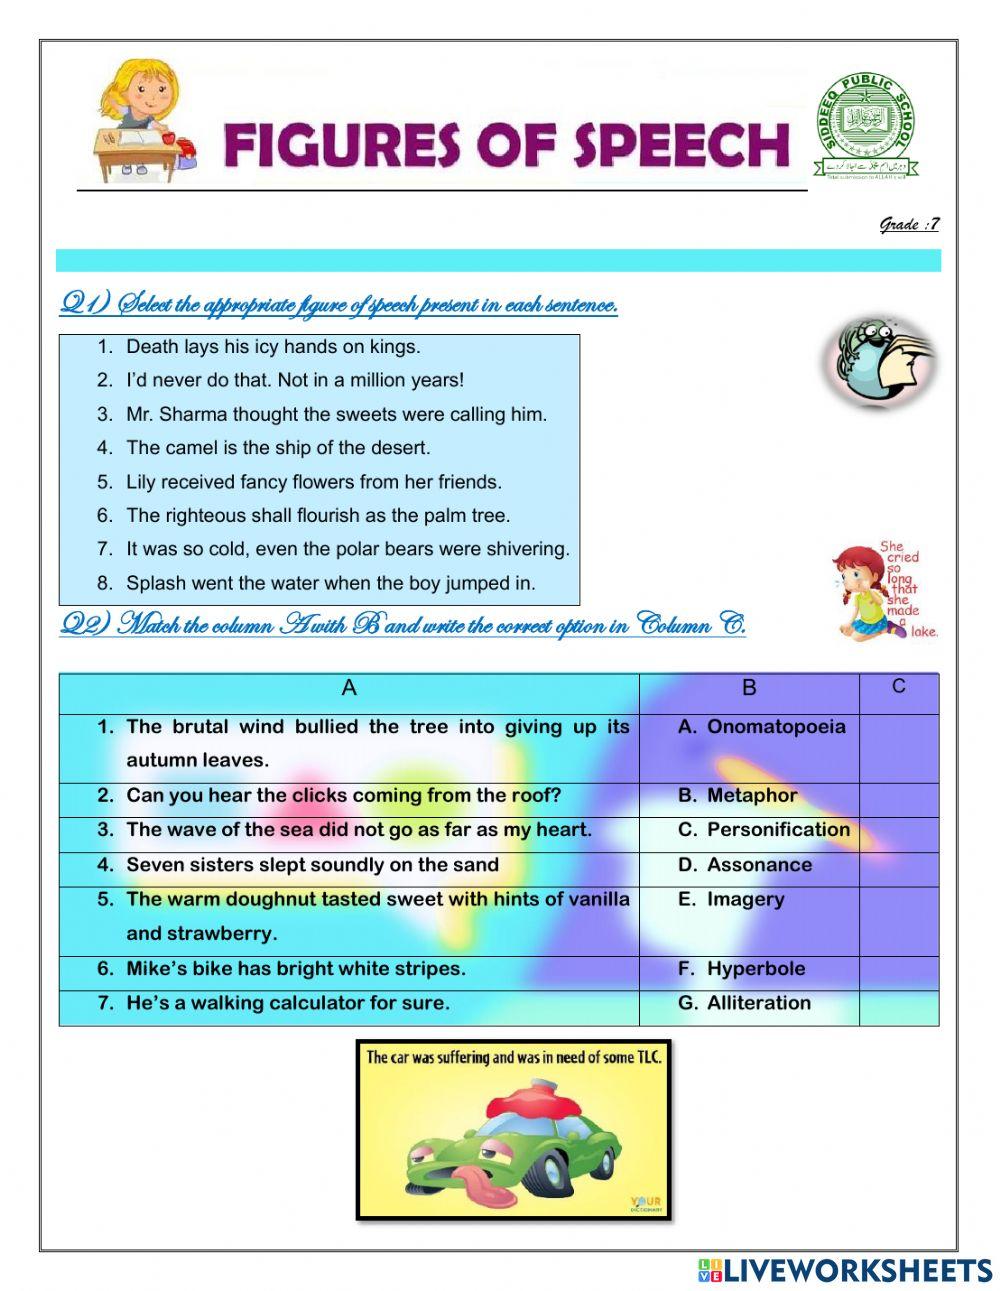 Figures of Speech (Figurative language)